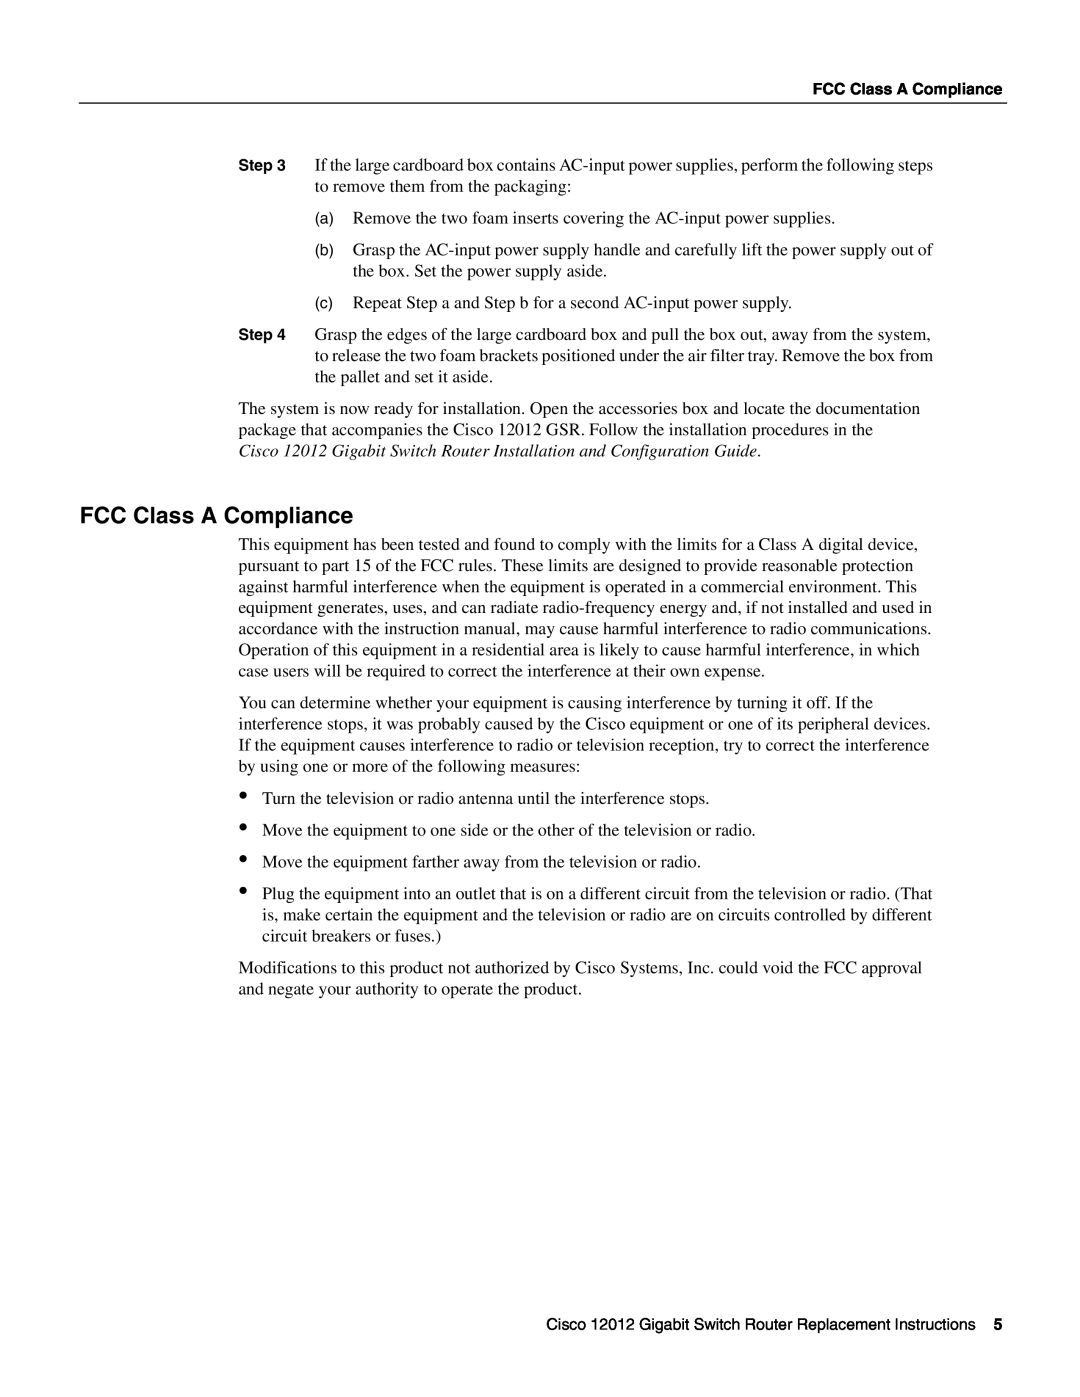 Cisco Systems Cisco 12012 manual FCC Class A Compliance 